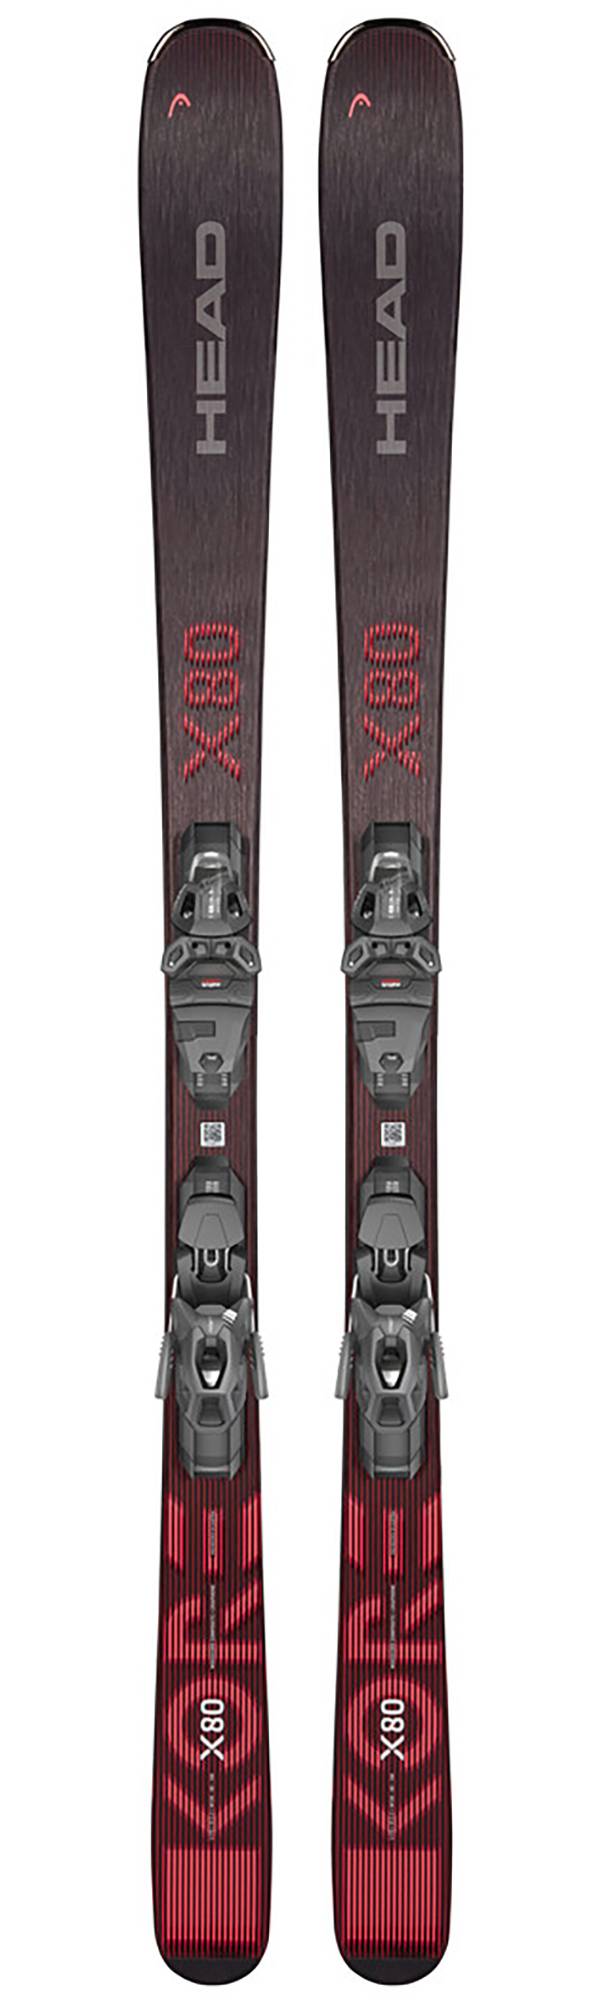 Head '23-'24 Men's KORE x 80 LYT Skis with PR 10 Bindings product image